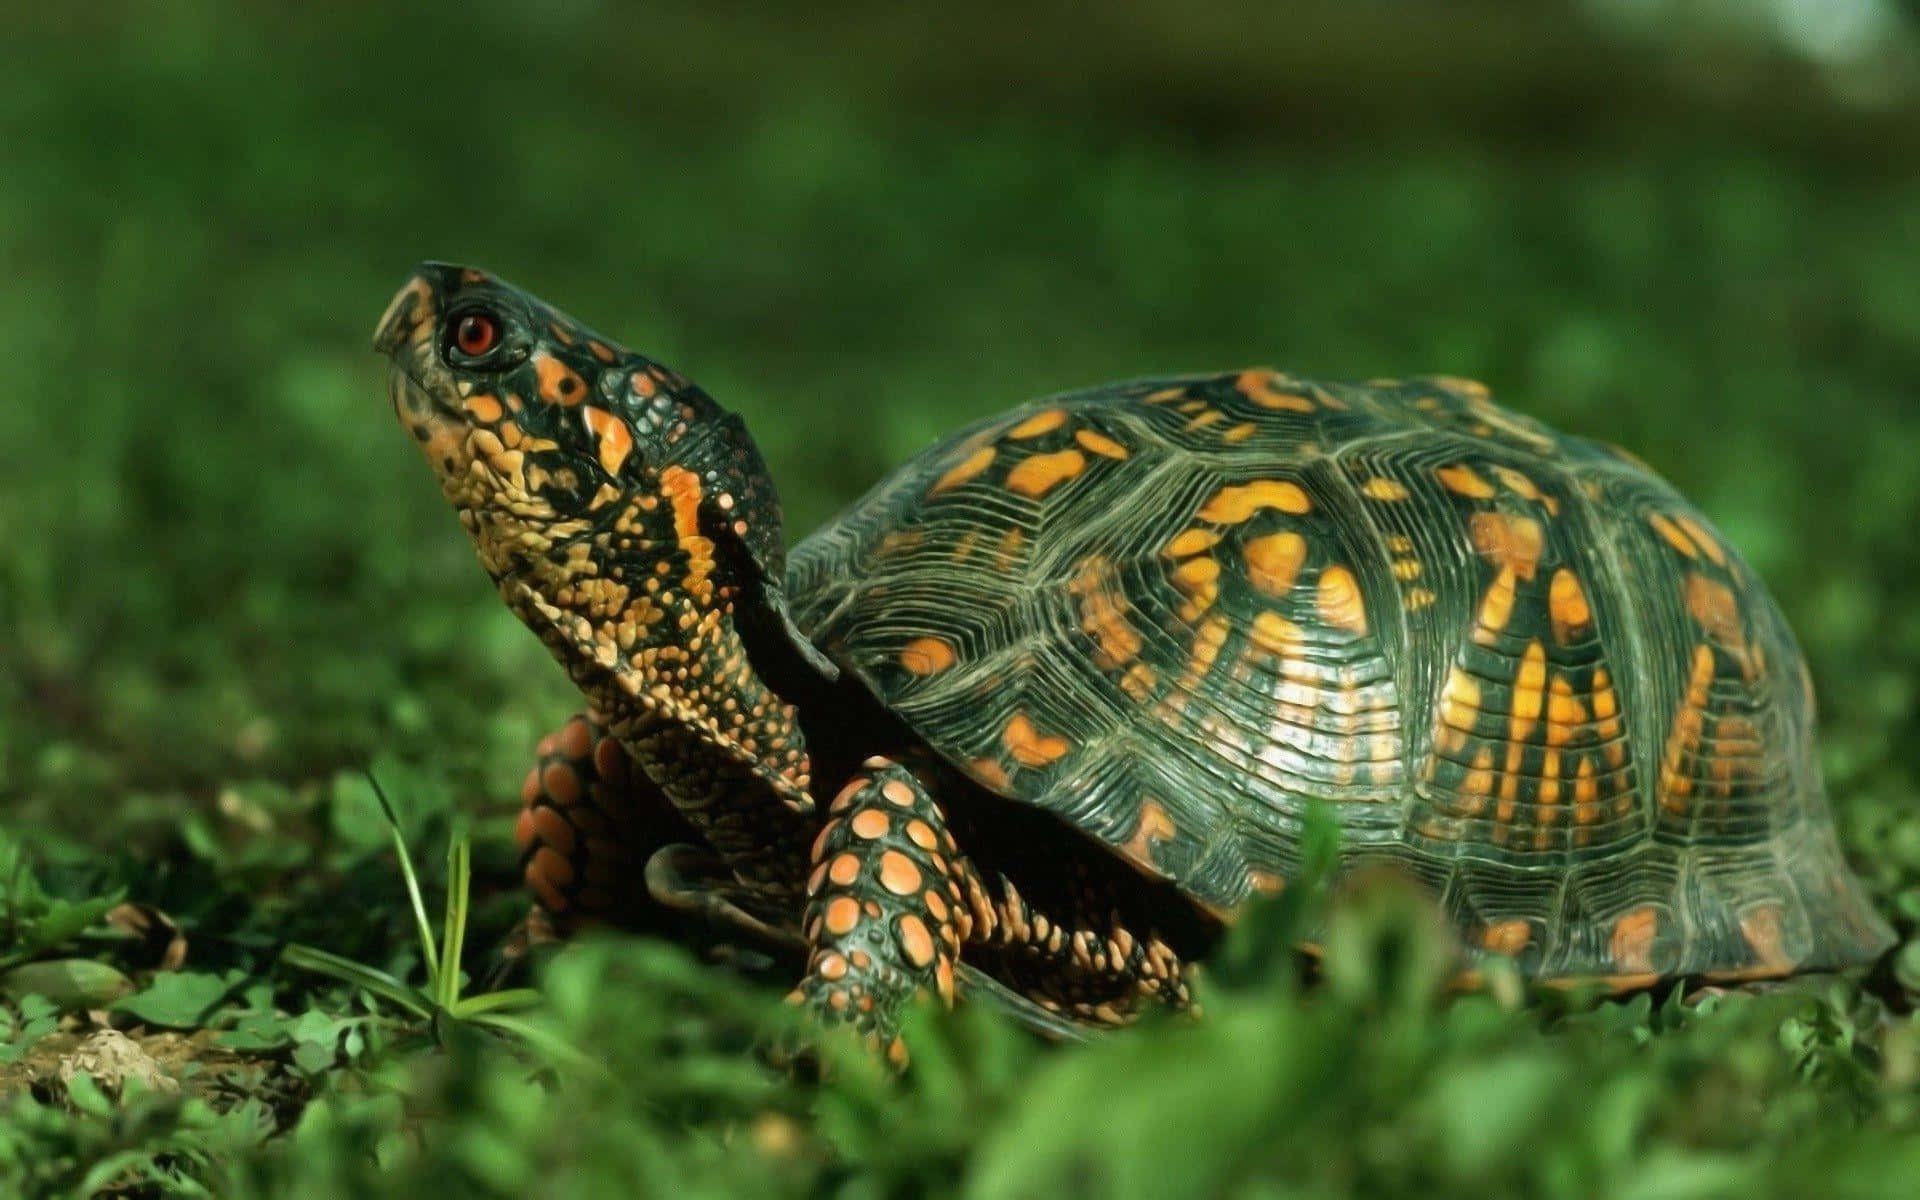 Stunning Portrait of a Radiant Green Tortoise